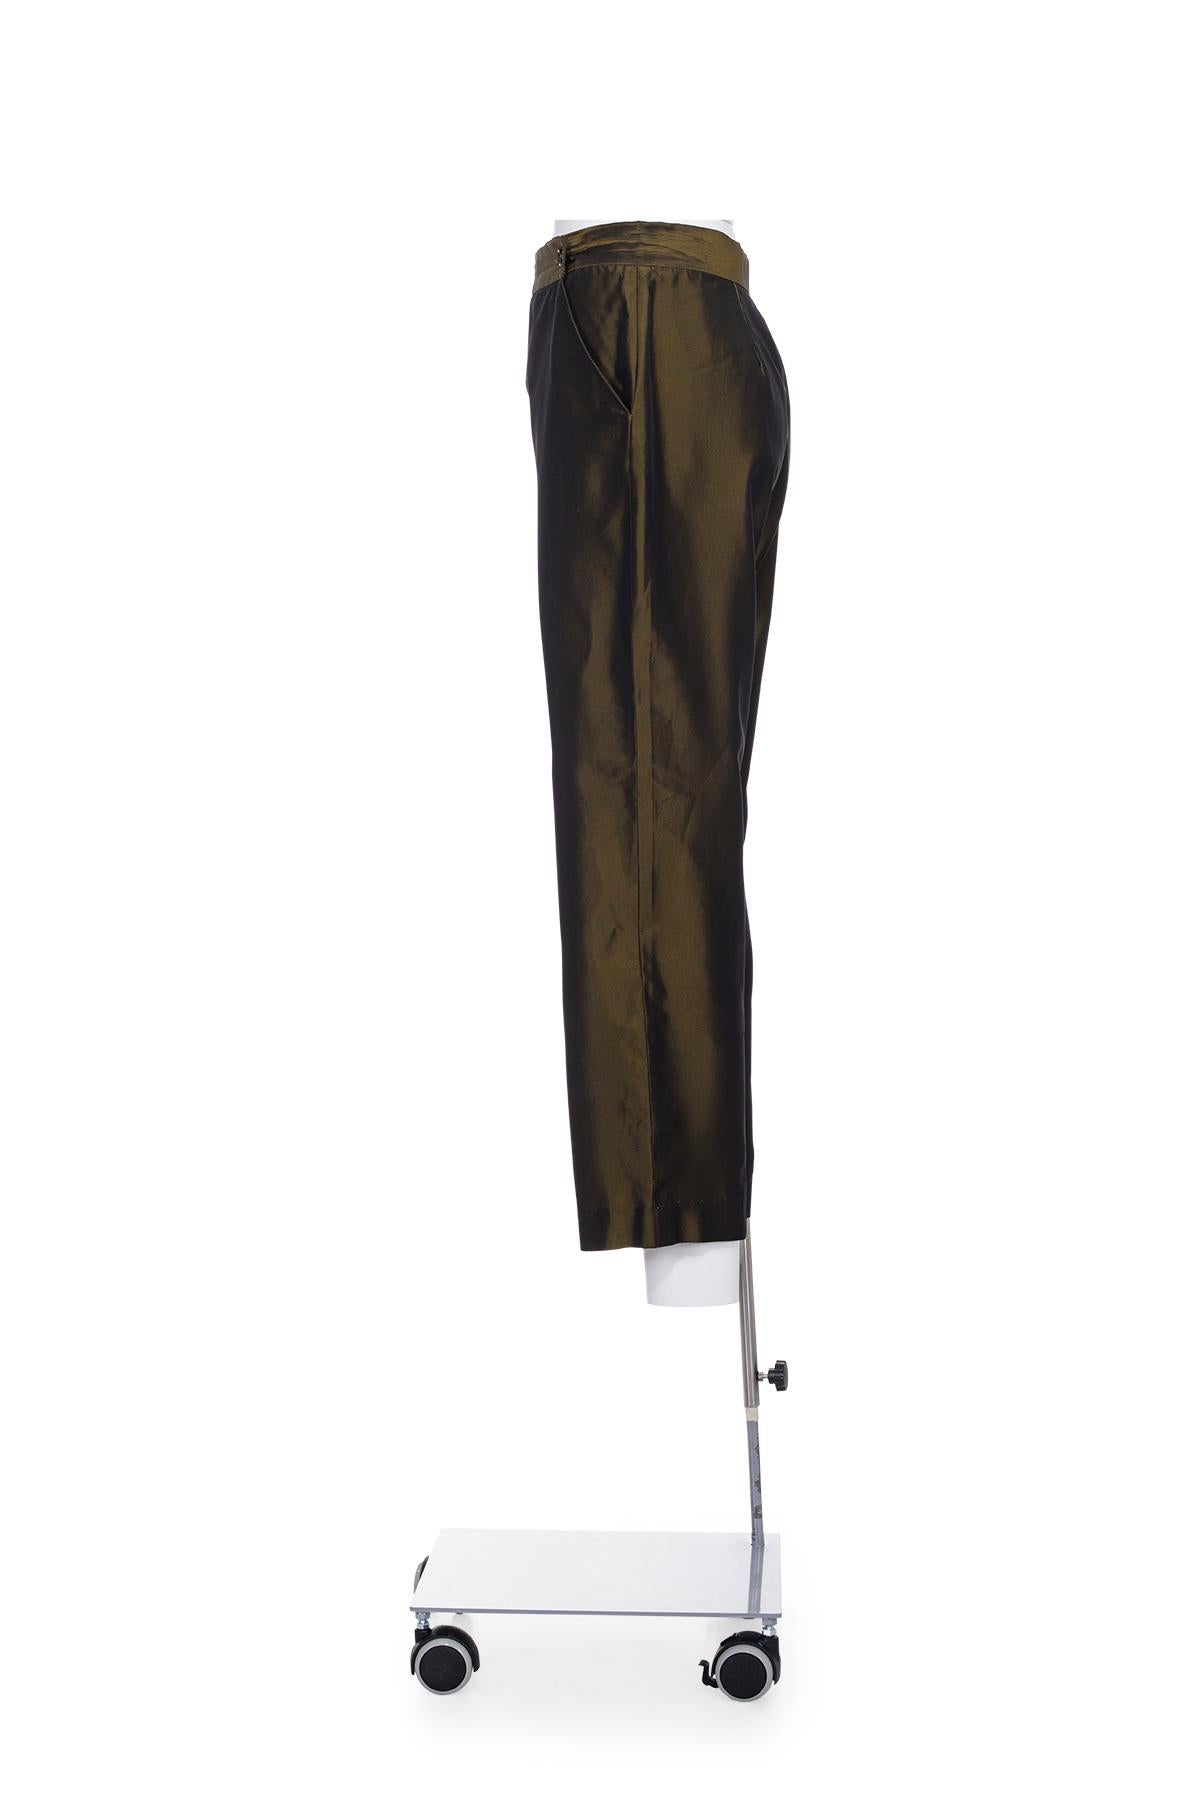 ALEXANDER MCQUEEN SS 97 Iridescent Taffeta Suit For Sale 5